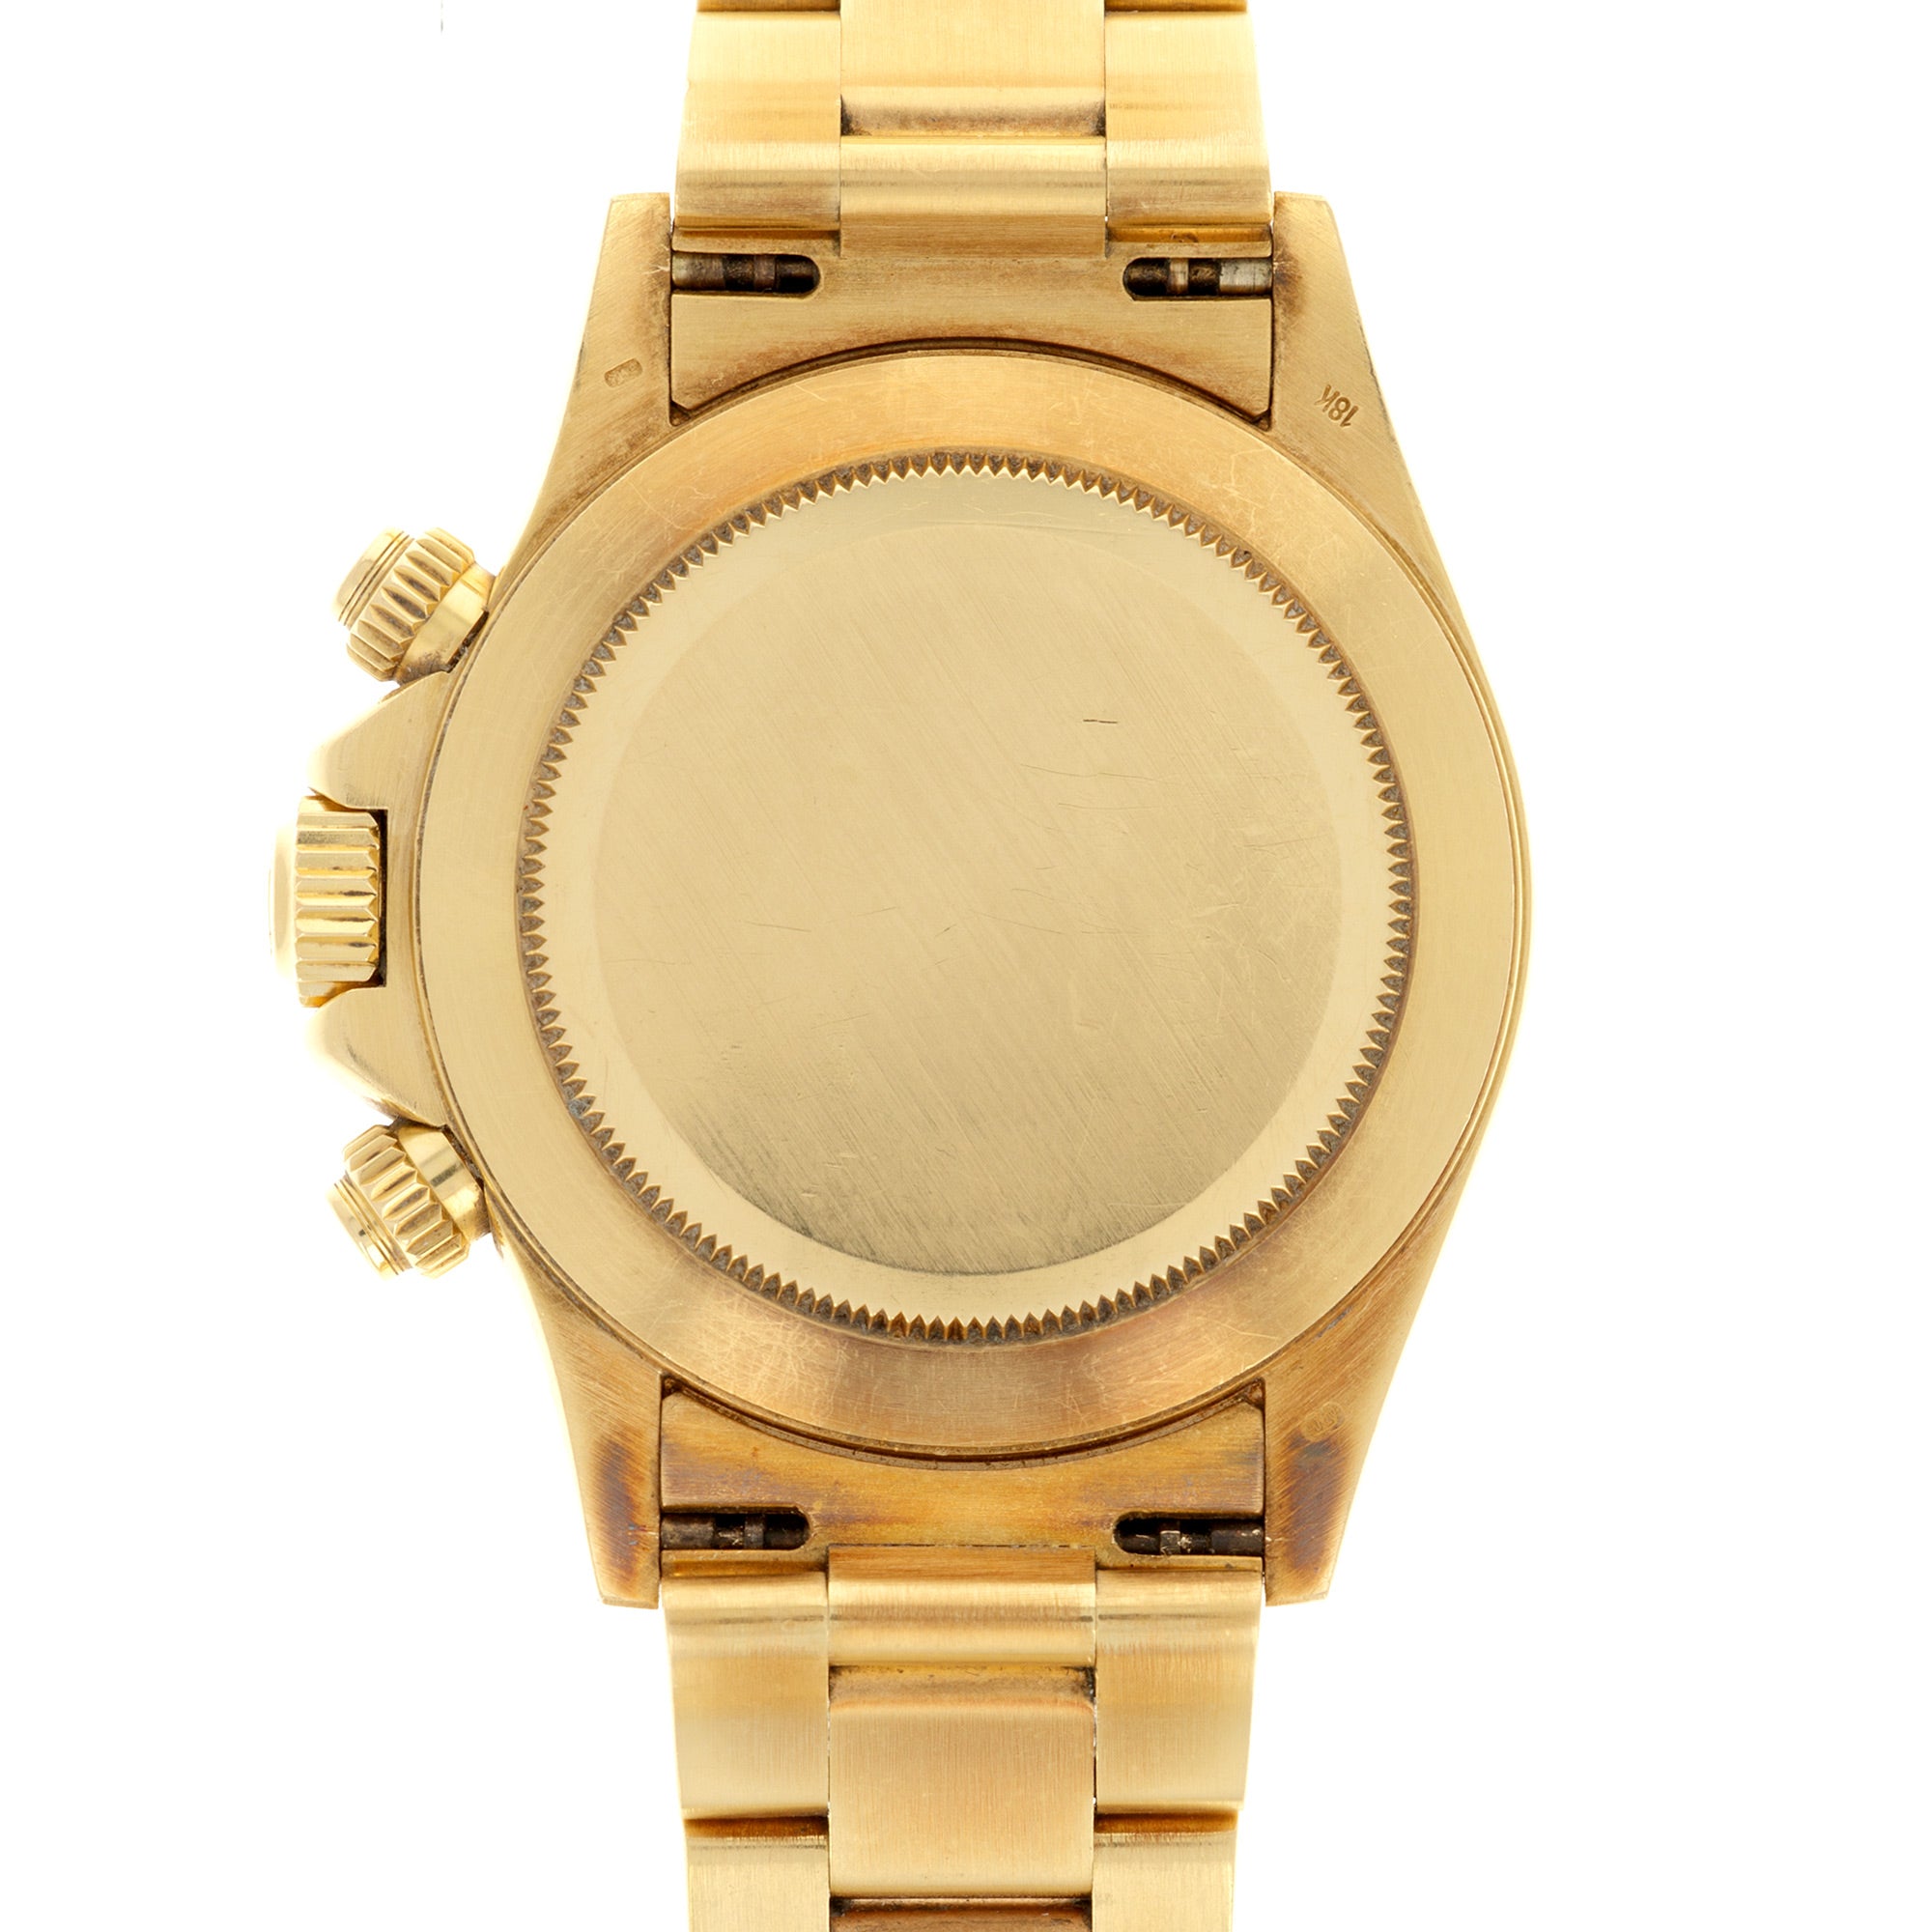 Rolex - Rolex Yellow Gold Cosmograph Daytona Zenith Watch Ref. 16528 from 1991 - The Keystone Watches